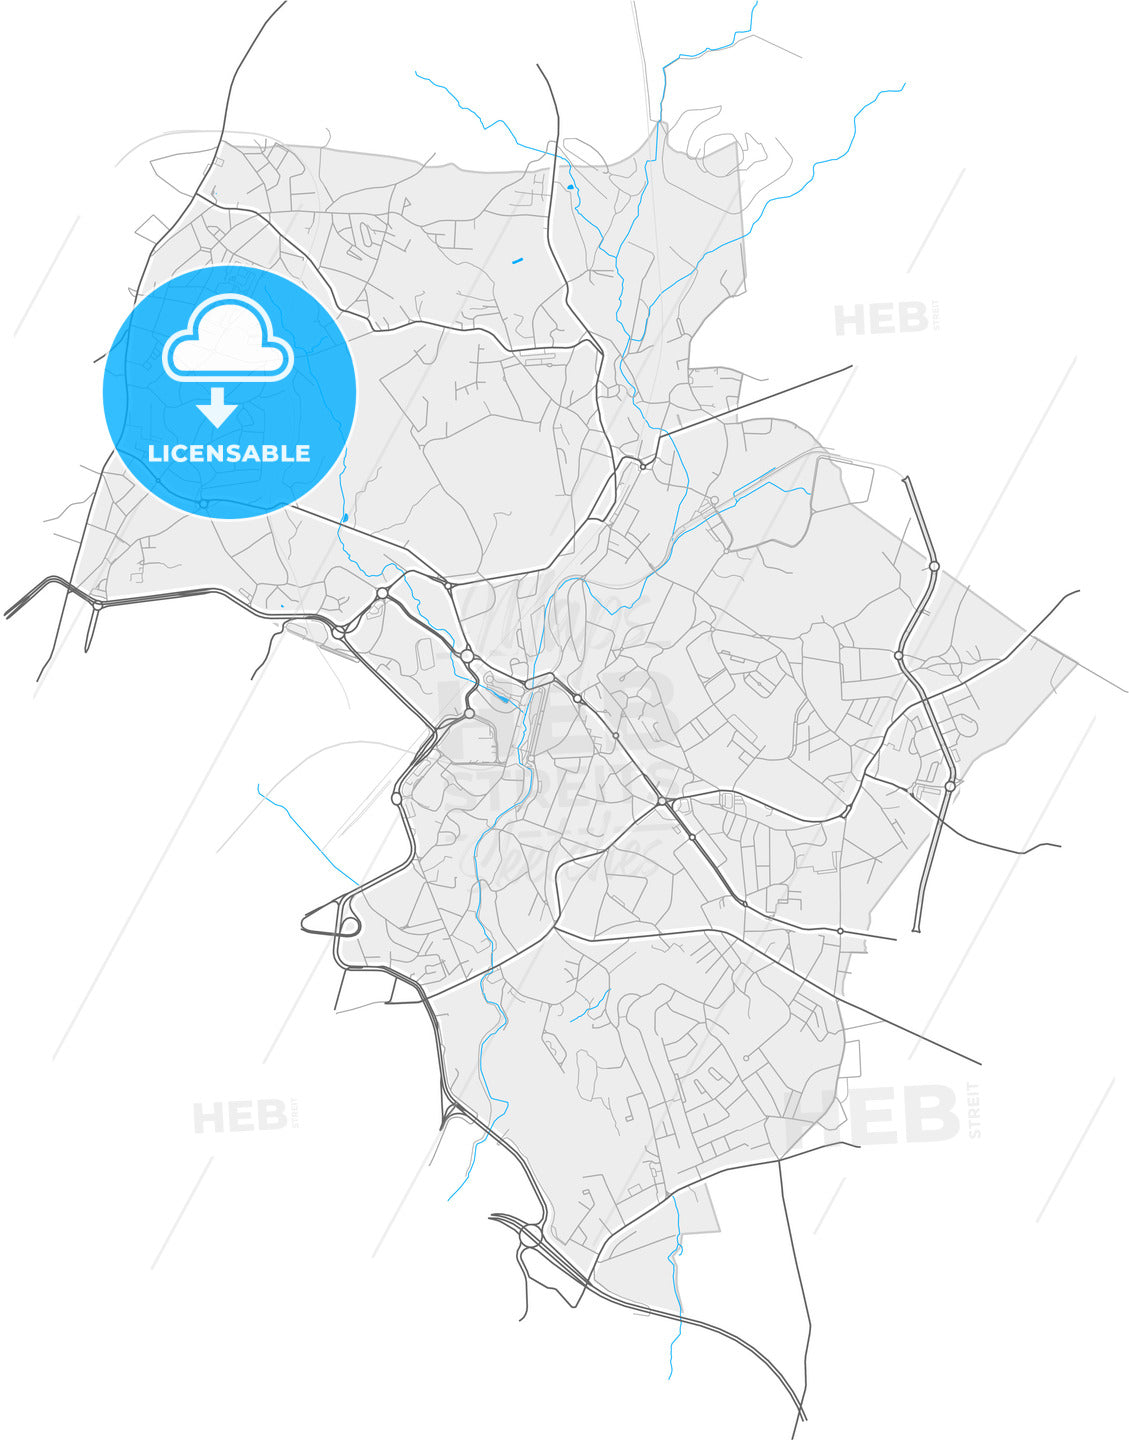 Rio Tinto, Gondomar, Portugal, high quality vector map